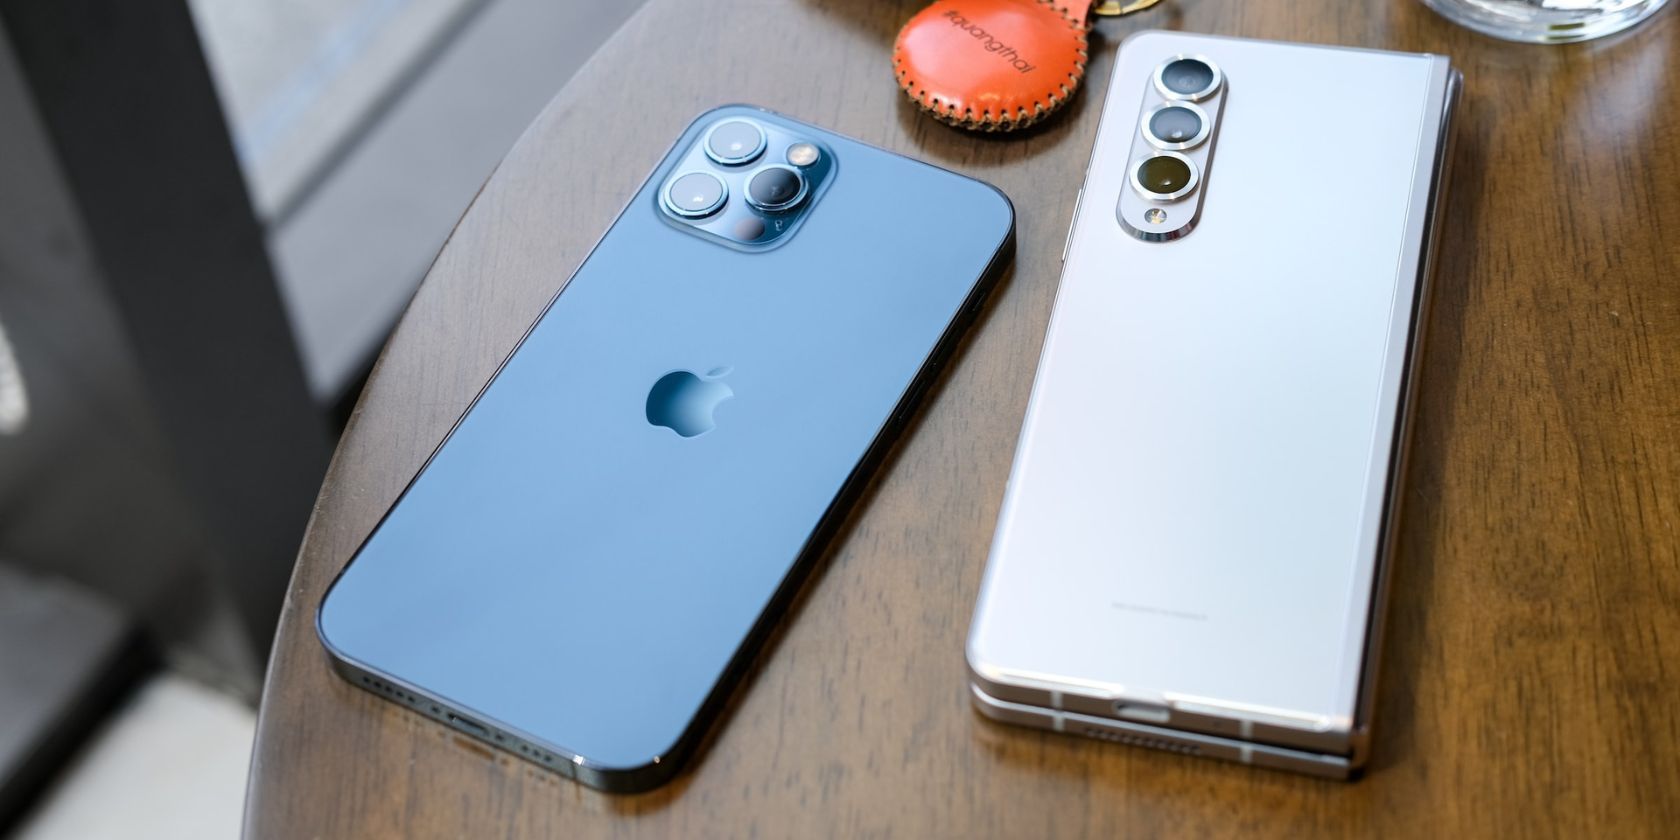 iPhone 13 Pro Pacific Blue alongside a Samsung Galaxy Z Fold 3 